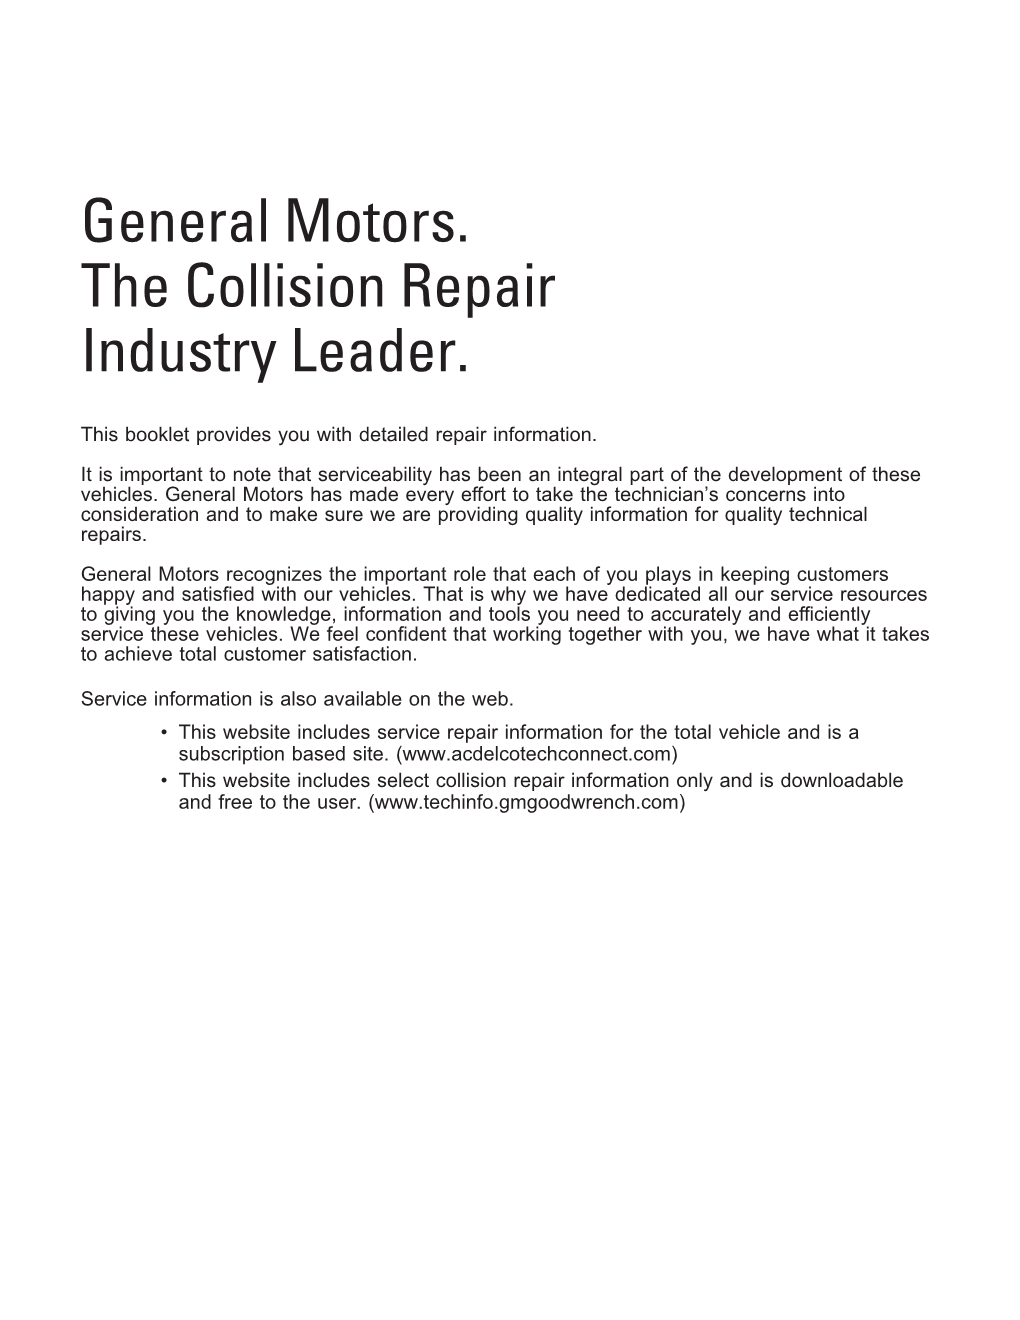 General Motors. the Collision Repair Industry Leader